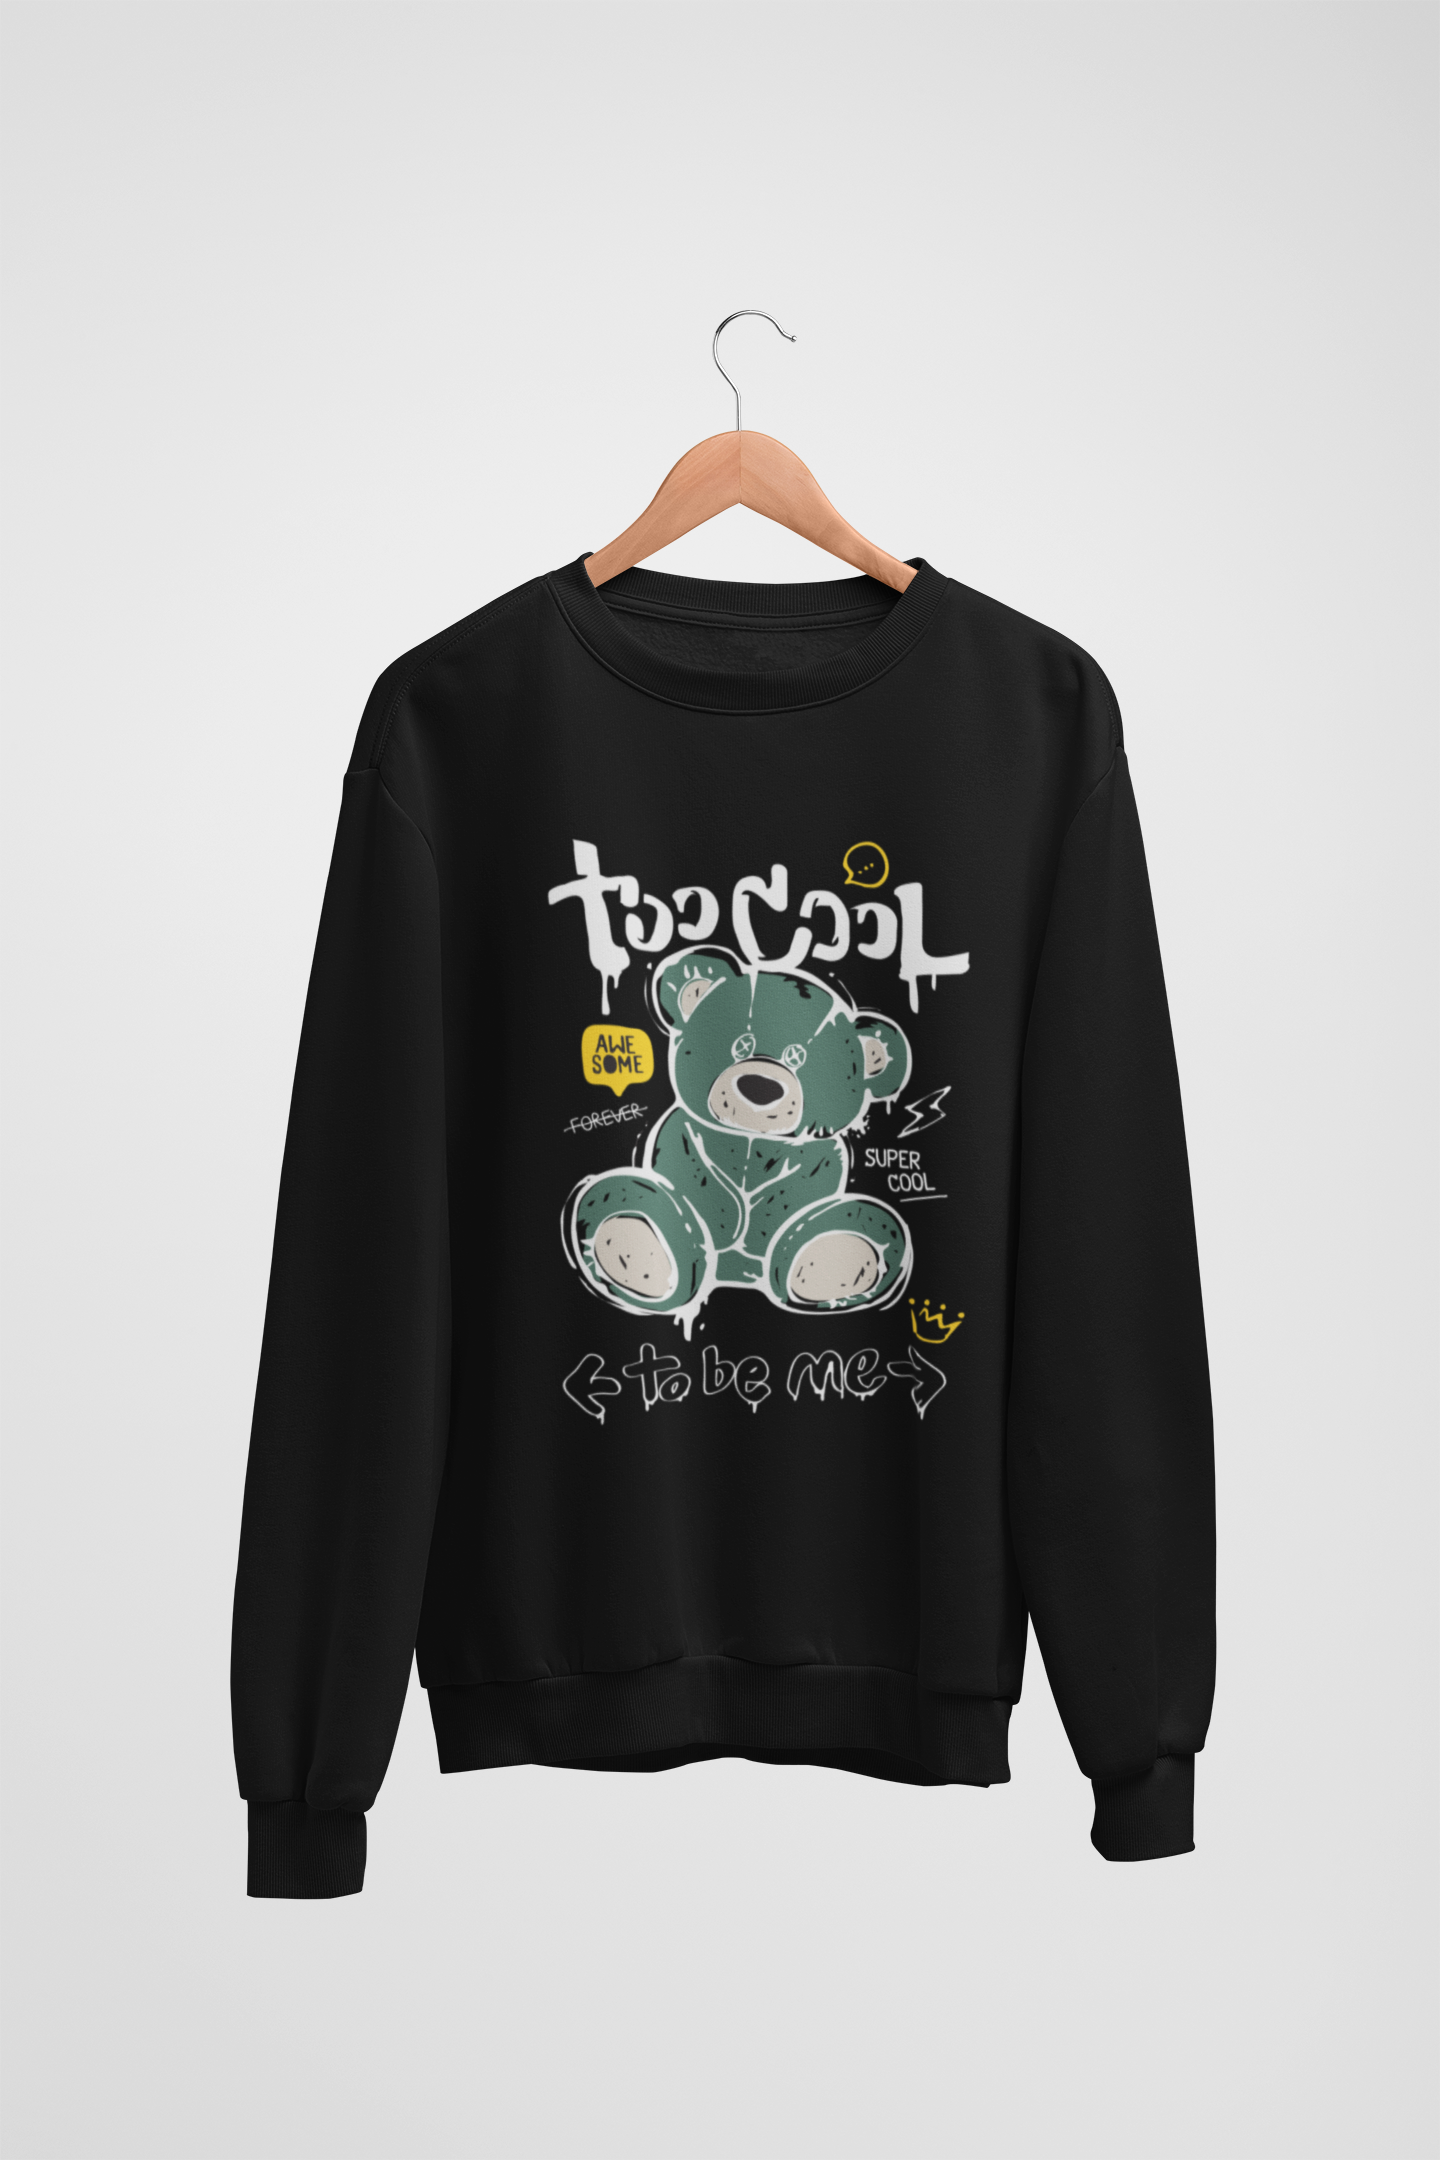 Too Cool Teddy Bear Black Sweatshirt For Women